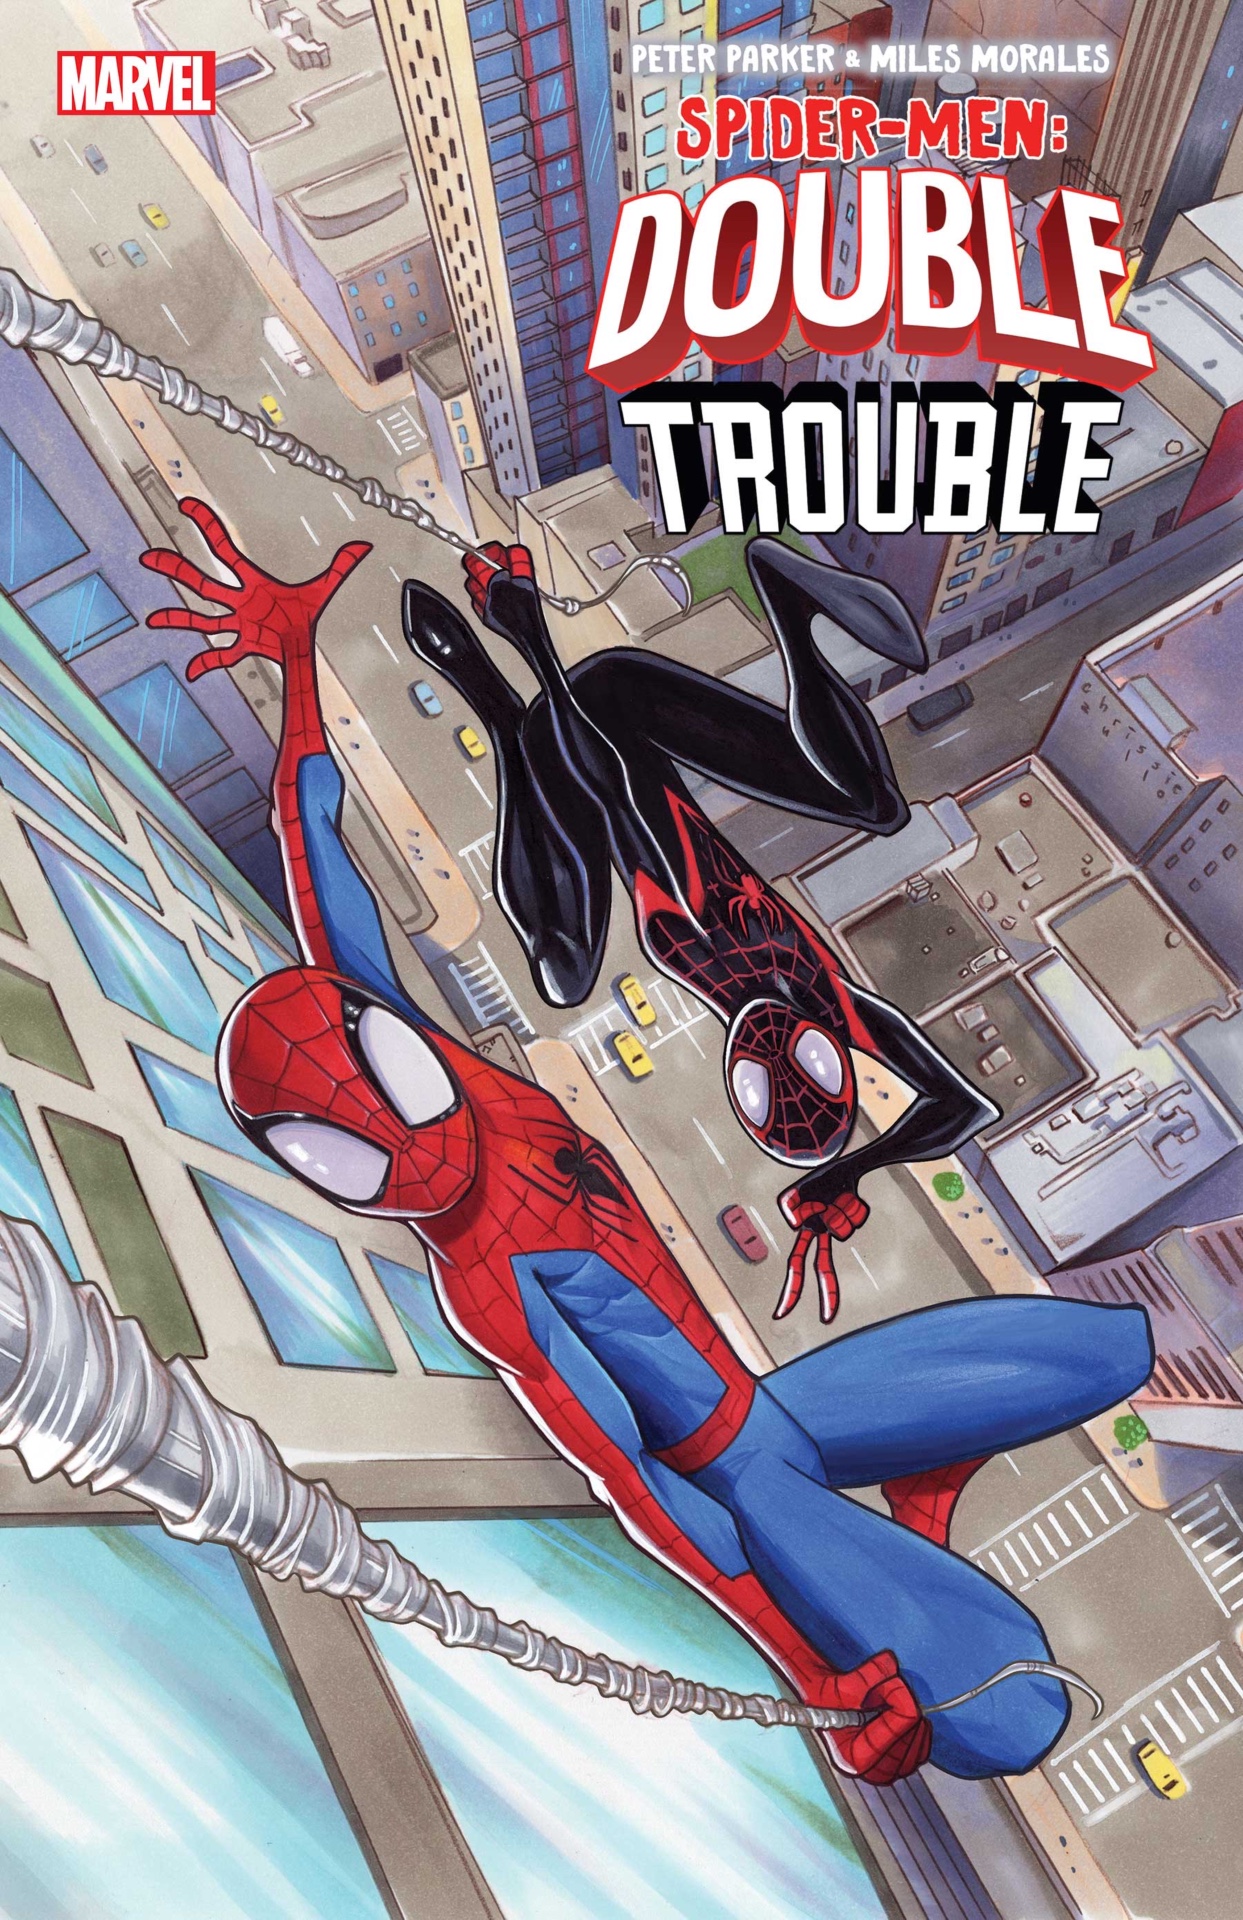 Portada de Spider-Men: Double Trouble #1